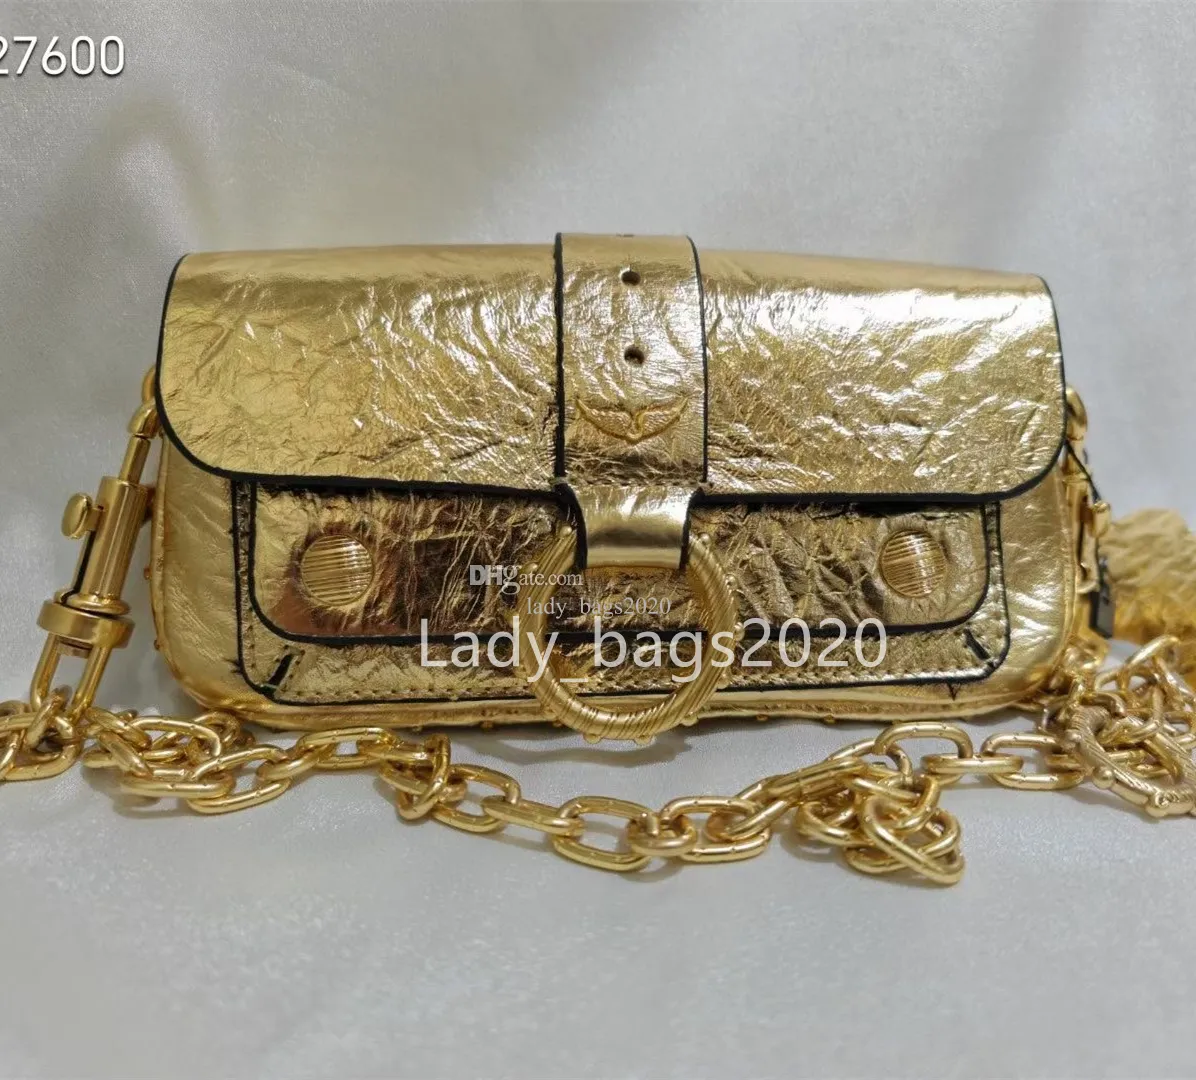 Zadig Voltaire Kate Bag ZV Ring Chains Tassen Canvas Designer Suede Mini Wings Diamond-ironing Woman Shoulder Bag Rivet Crossbody Purse Leather Handbags